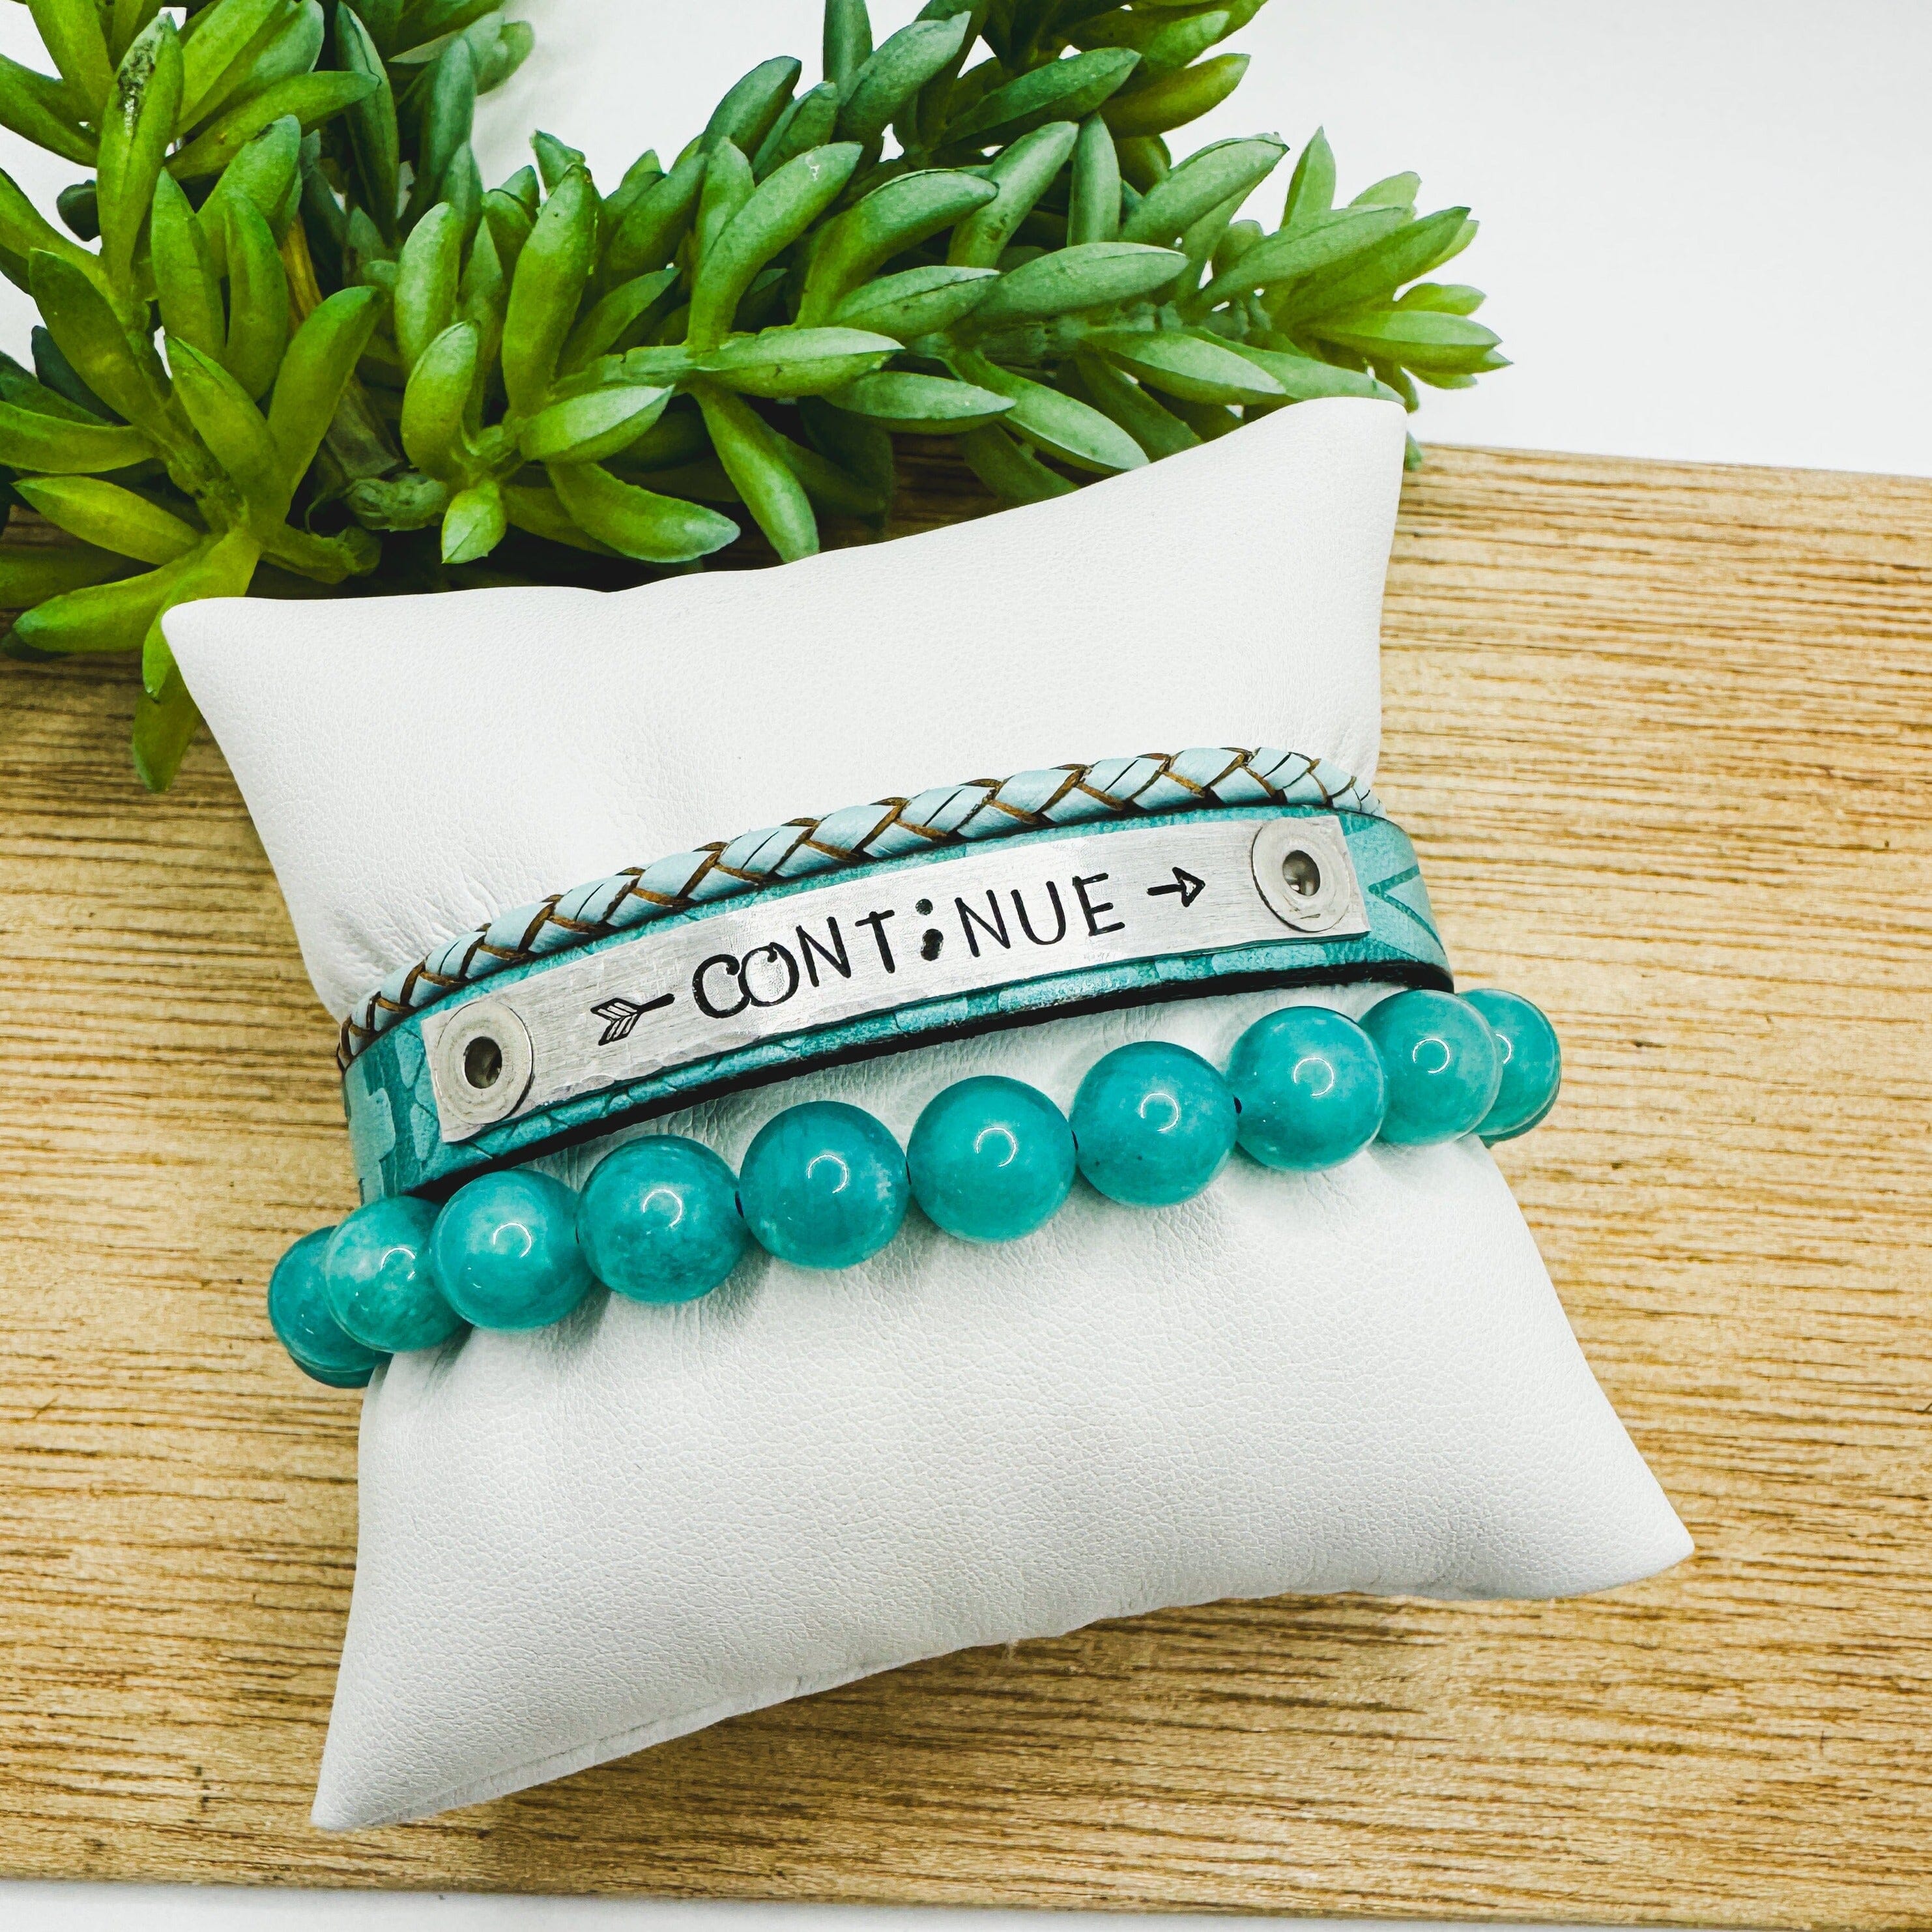 CONT;NUE Semi-Colon Southwestern Turquoise | Skinny Leather Bracelet | Women Teens | Adjustable Skinny Bracelets Create Hope Cuffs 